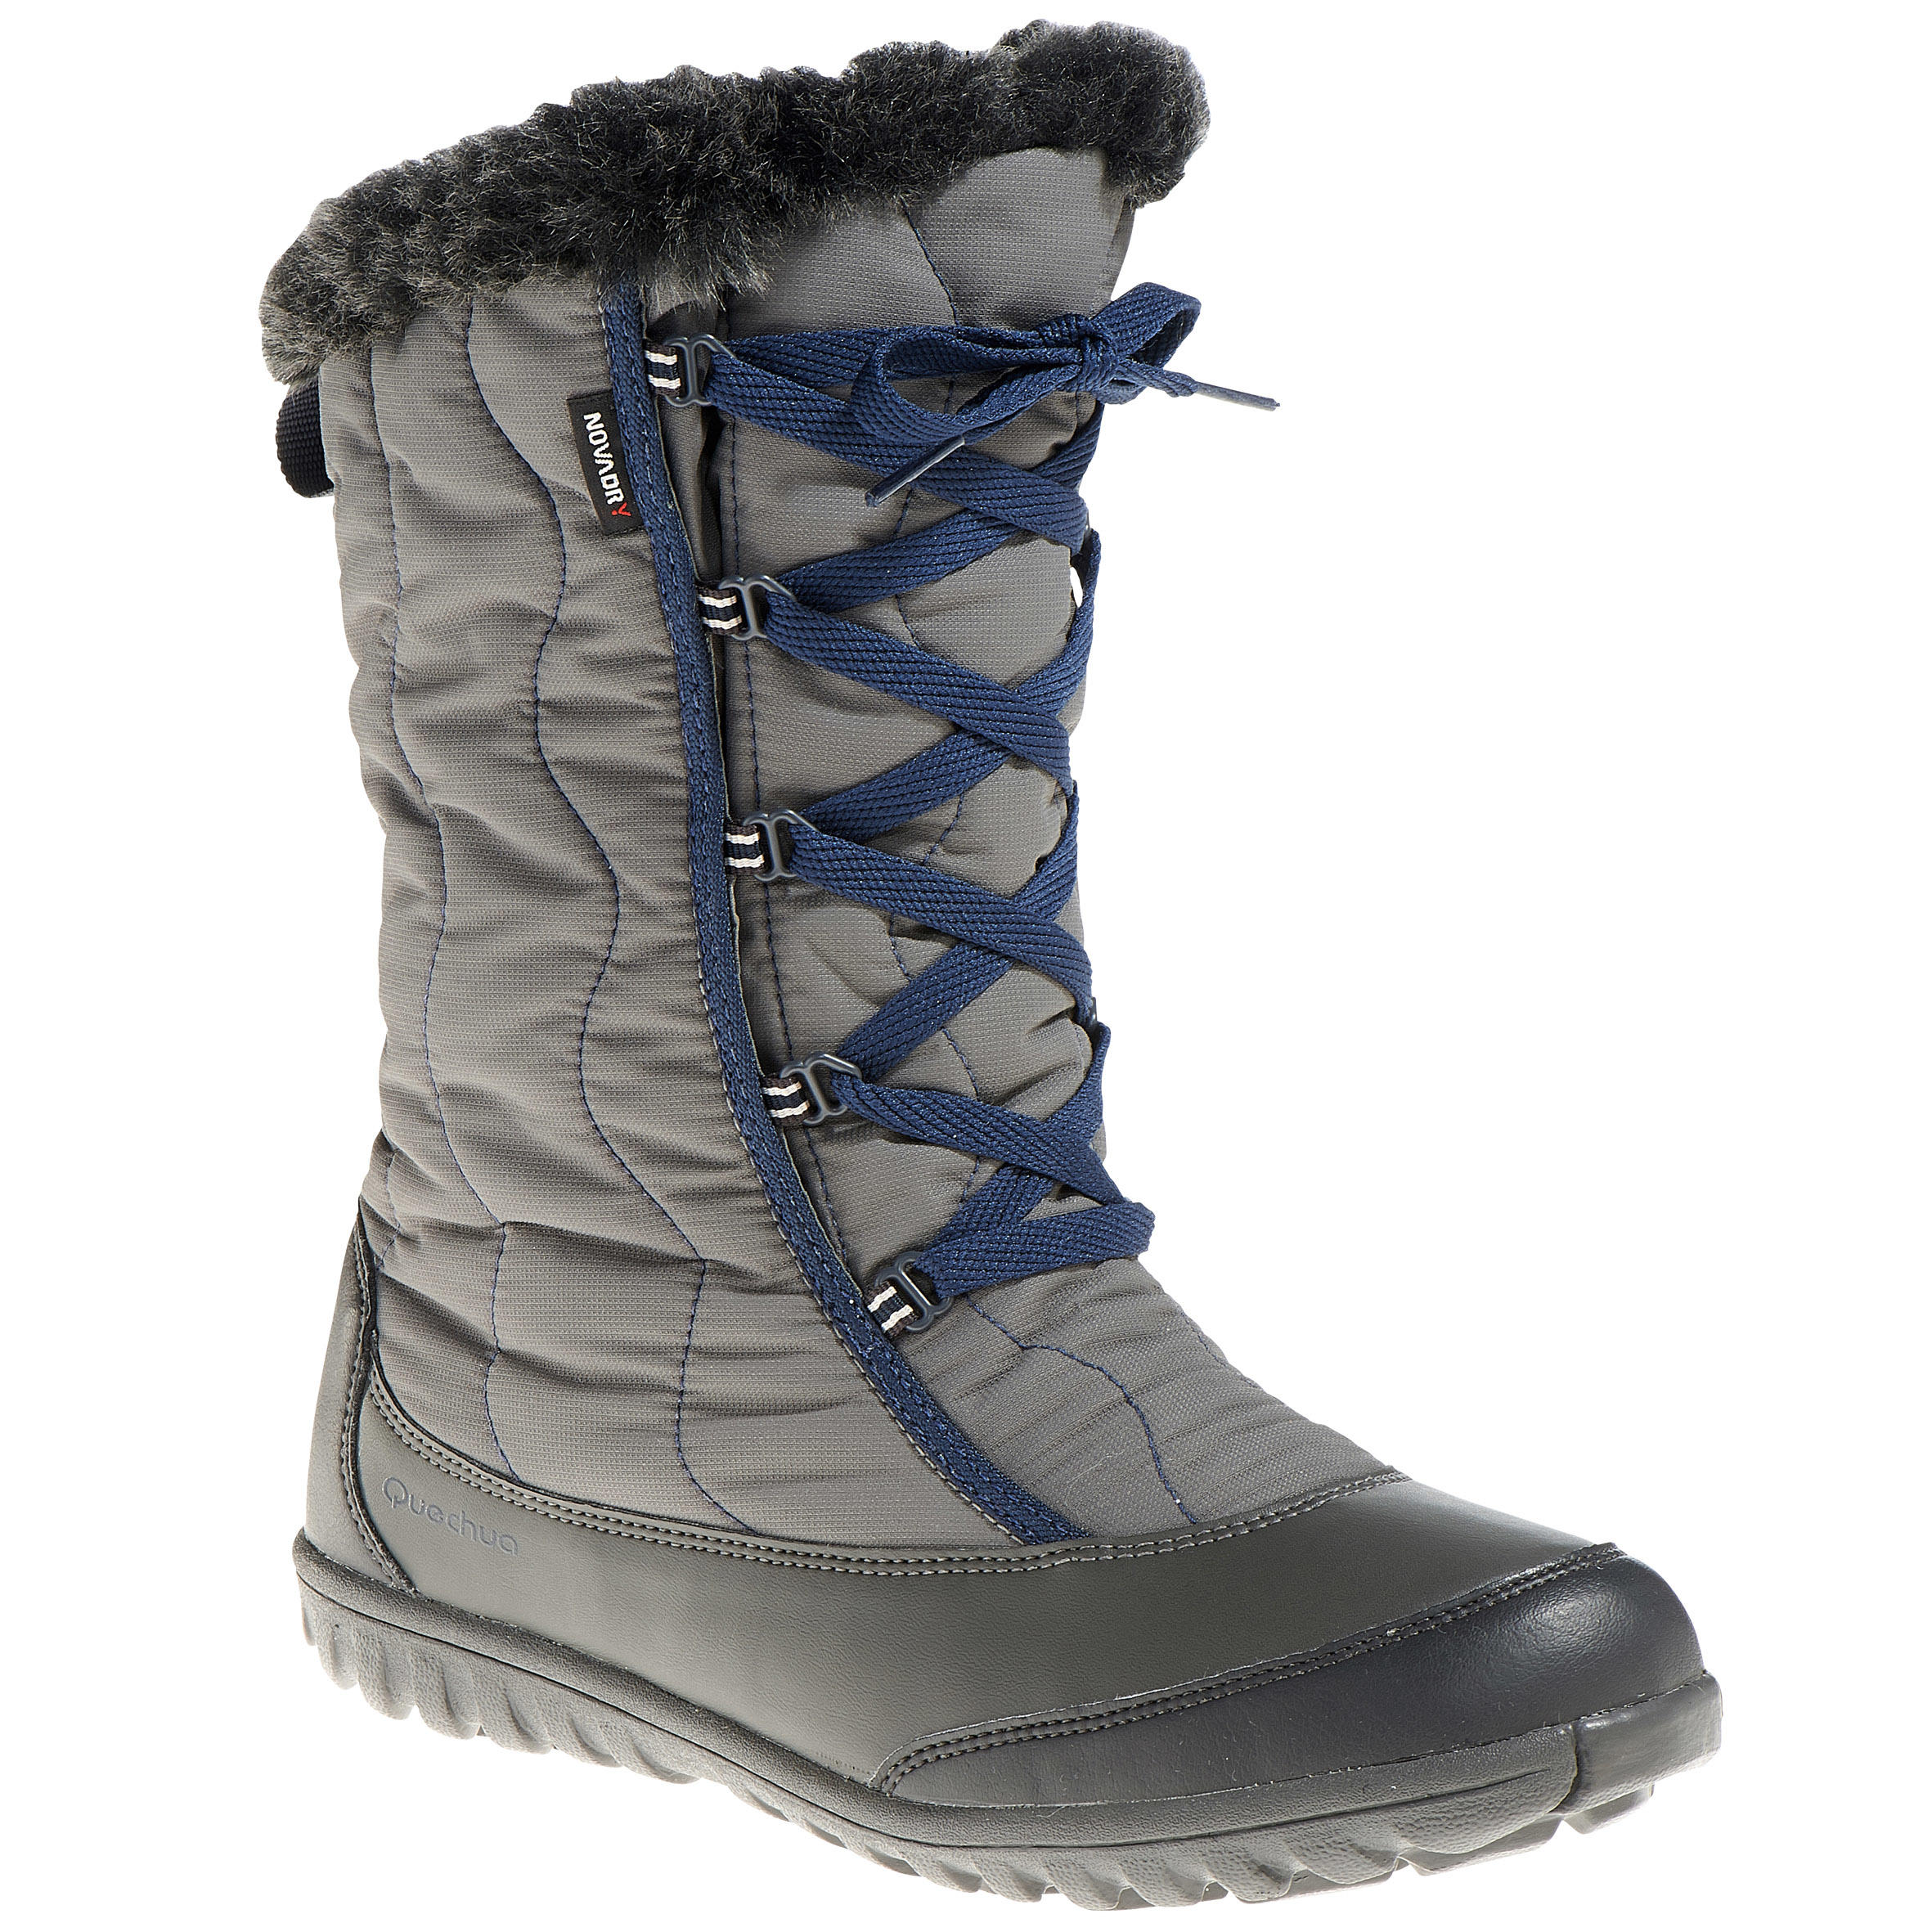 QUECHUA Quechua Arpenaz 500 Warm waterproof women's hiking boots